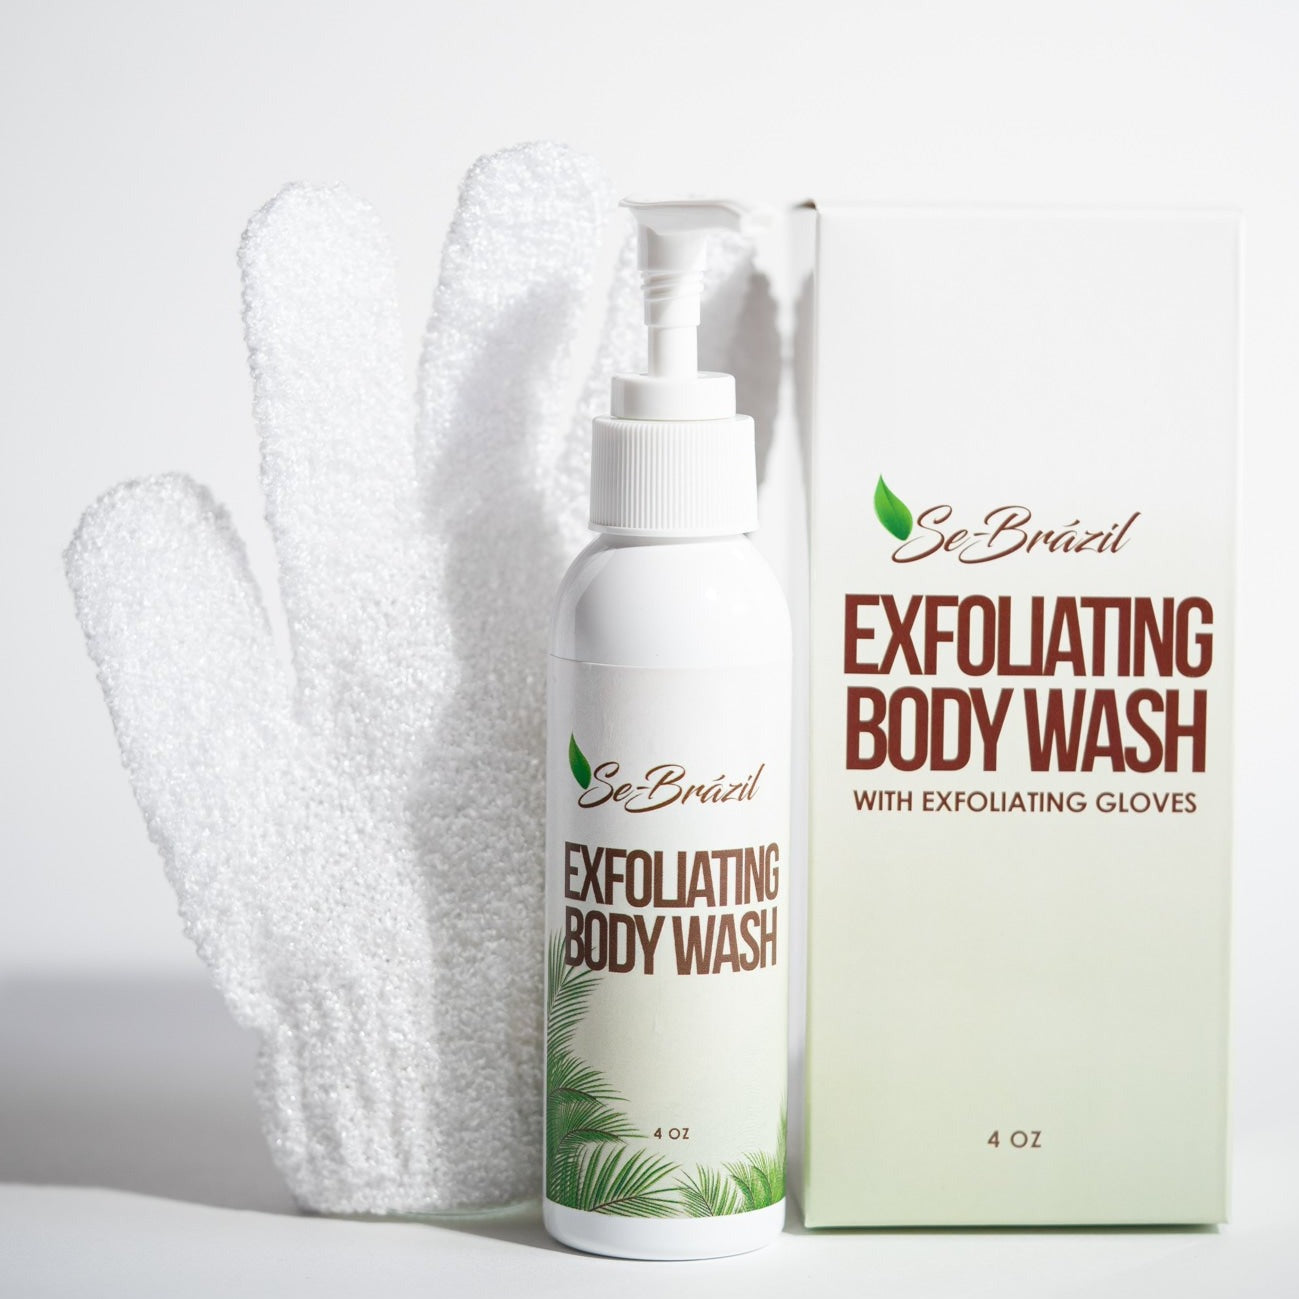 Se-Brazil Exfoliating Body Wash 4oz with Exfoliating Gloves